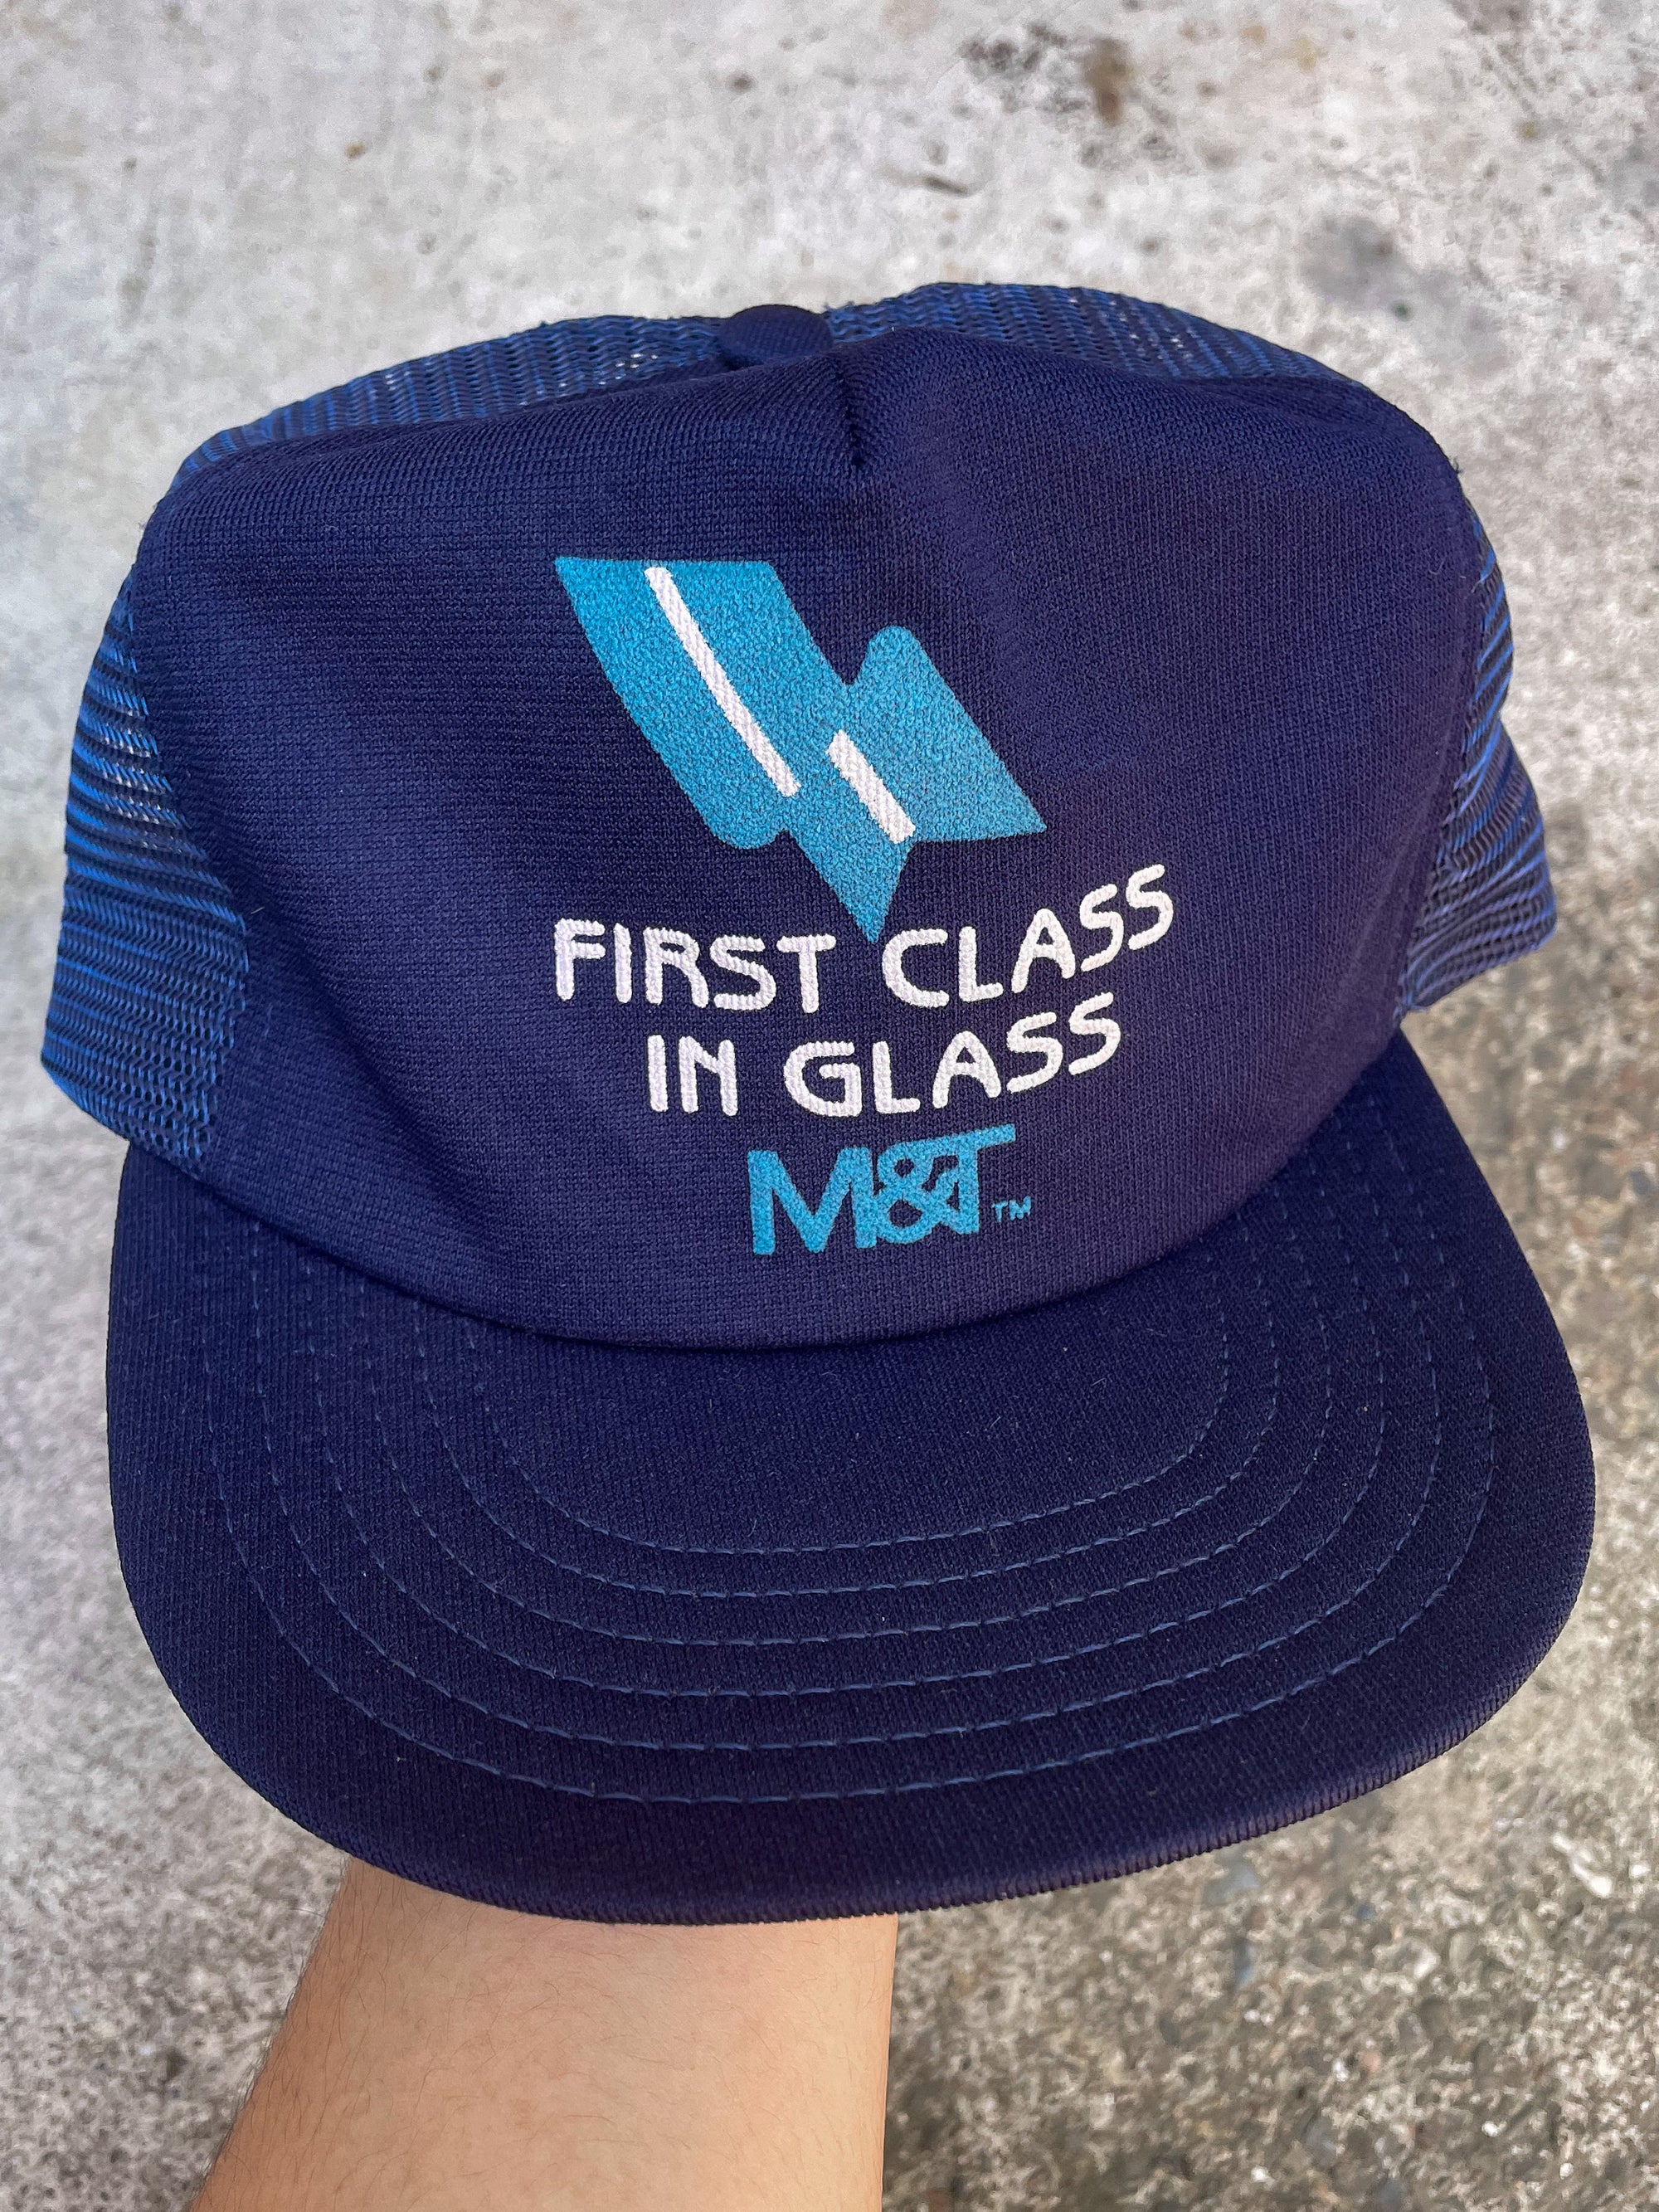 1980s “First Class In Glass” Trucker Hat